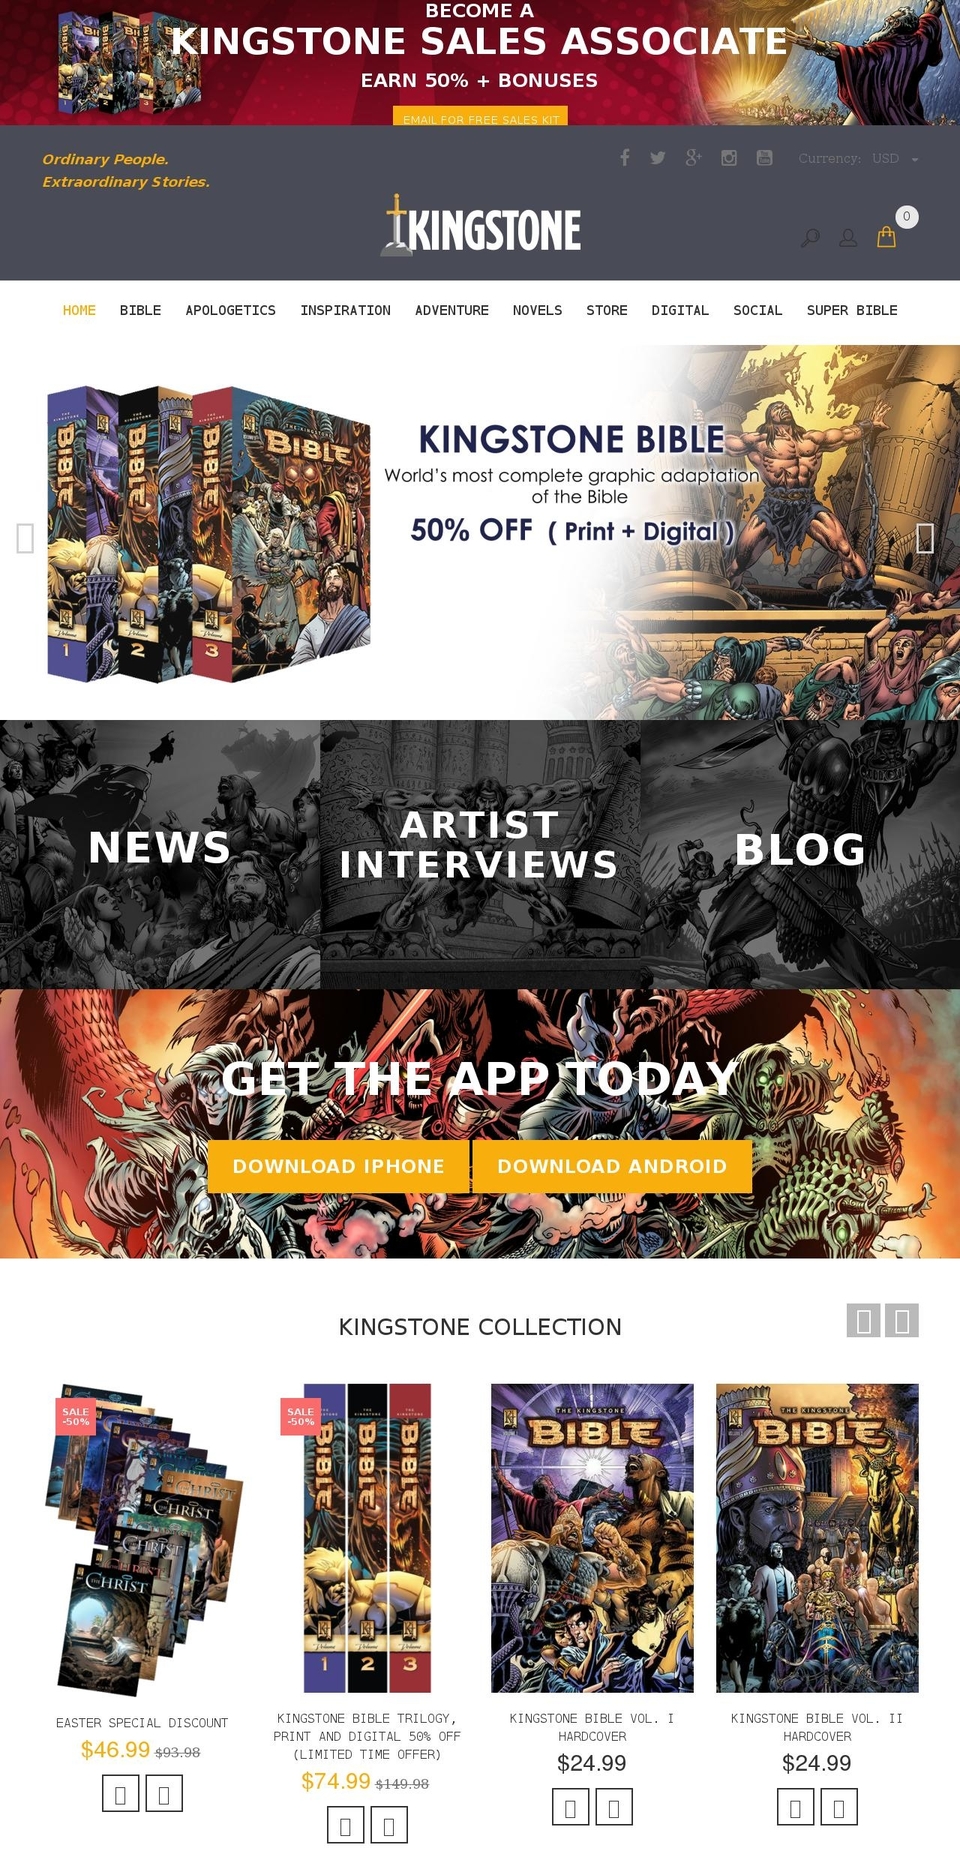 kingstonecomics.com shopify website screenshot